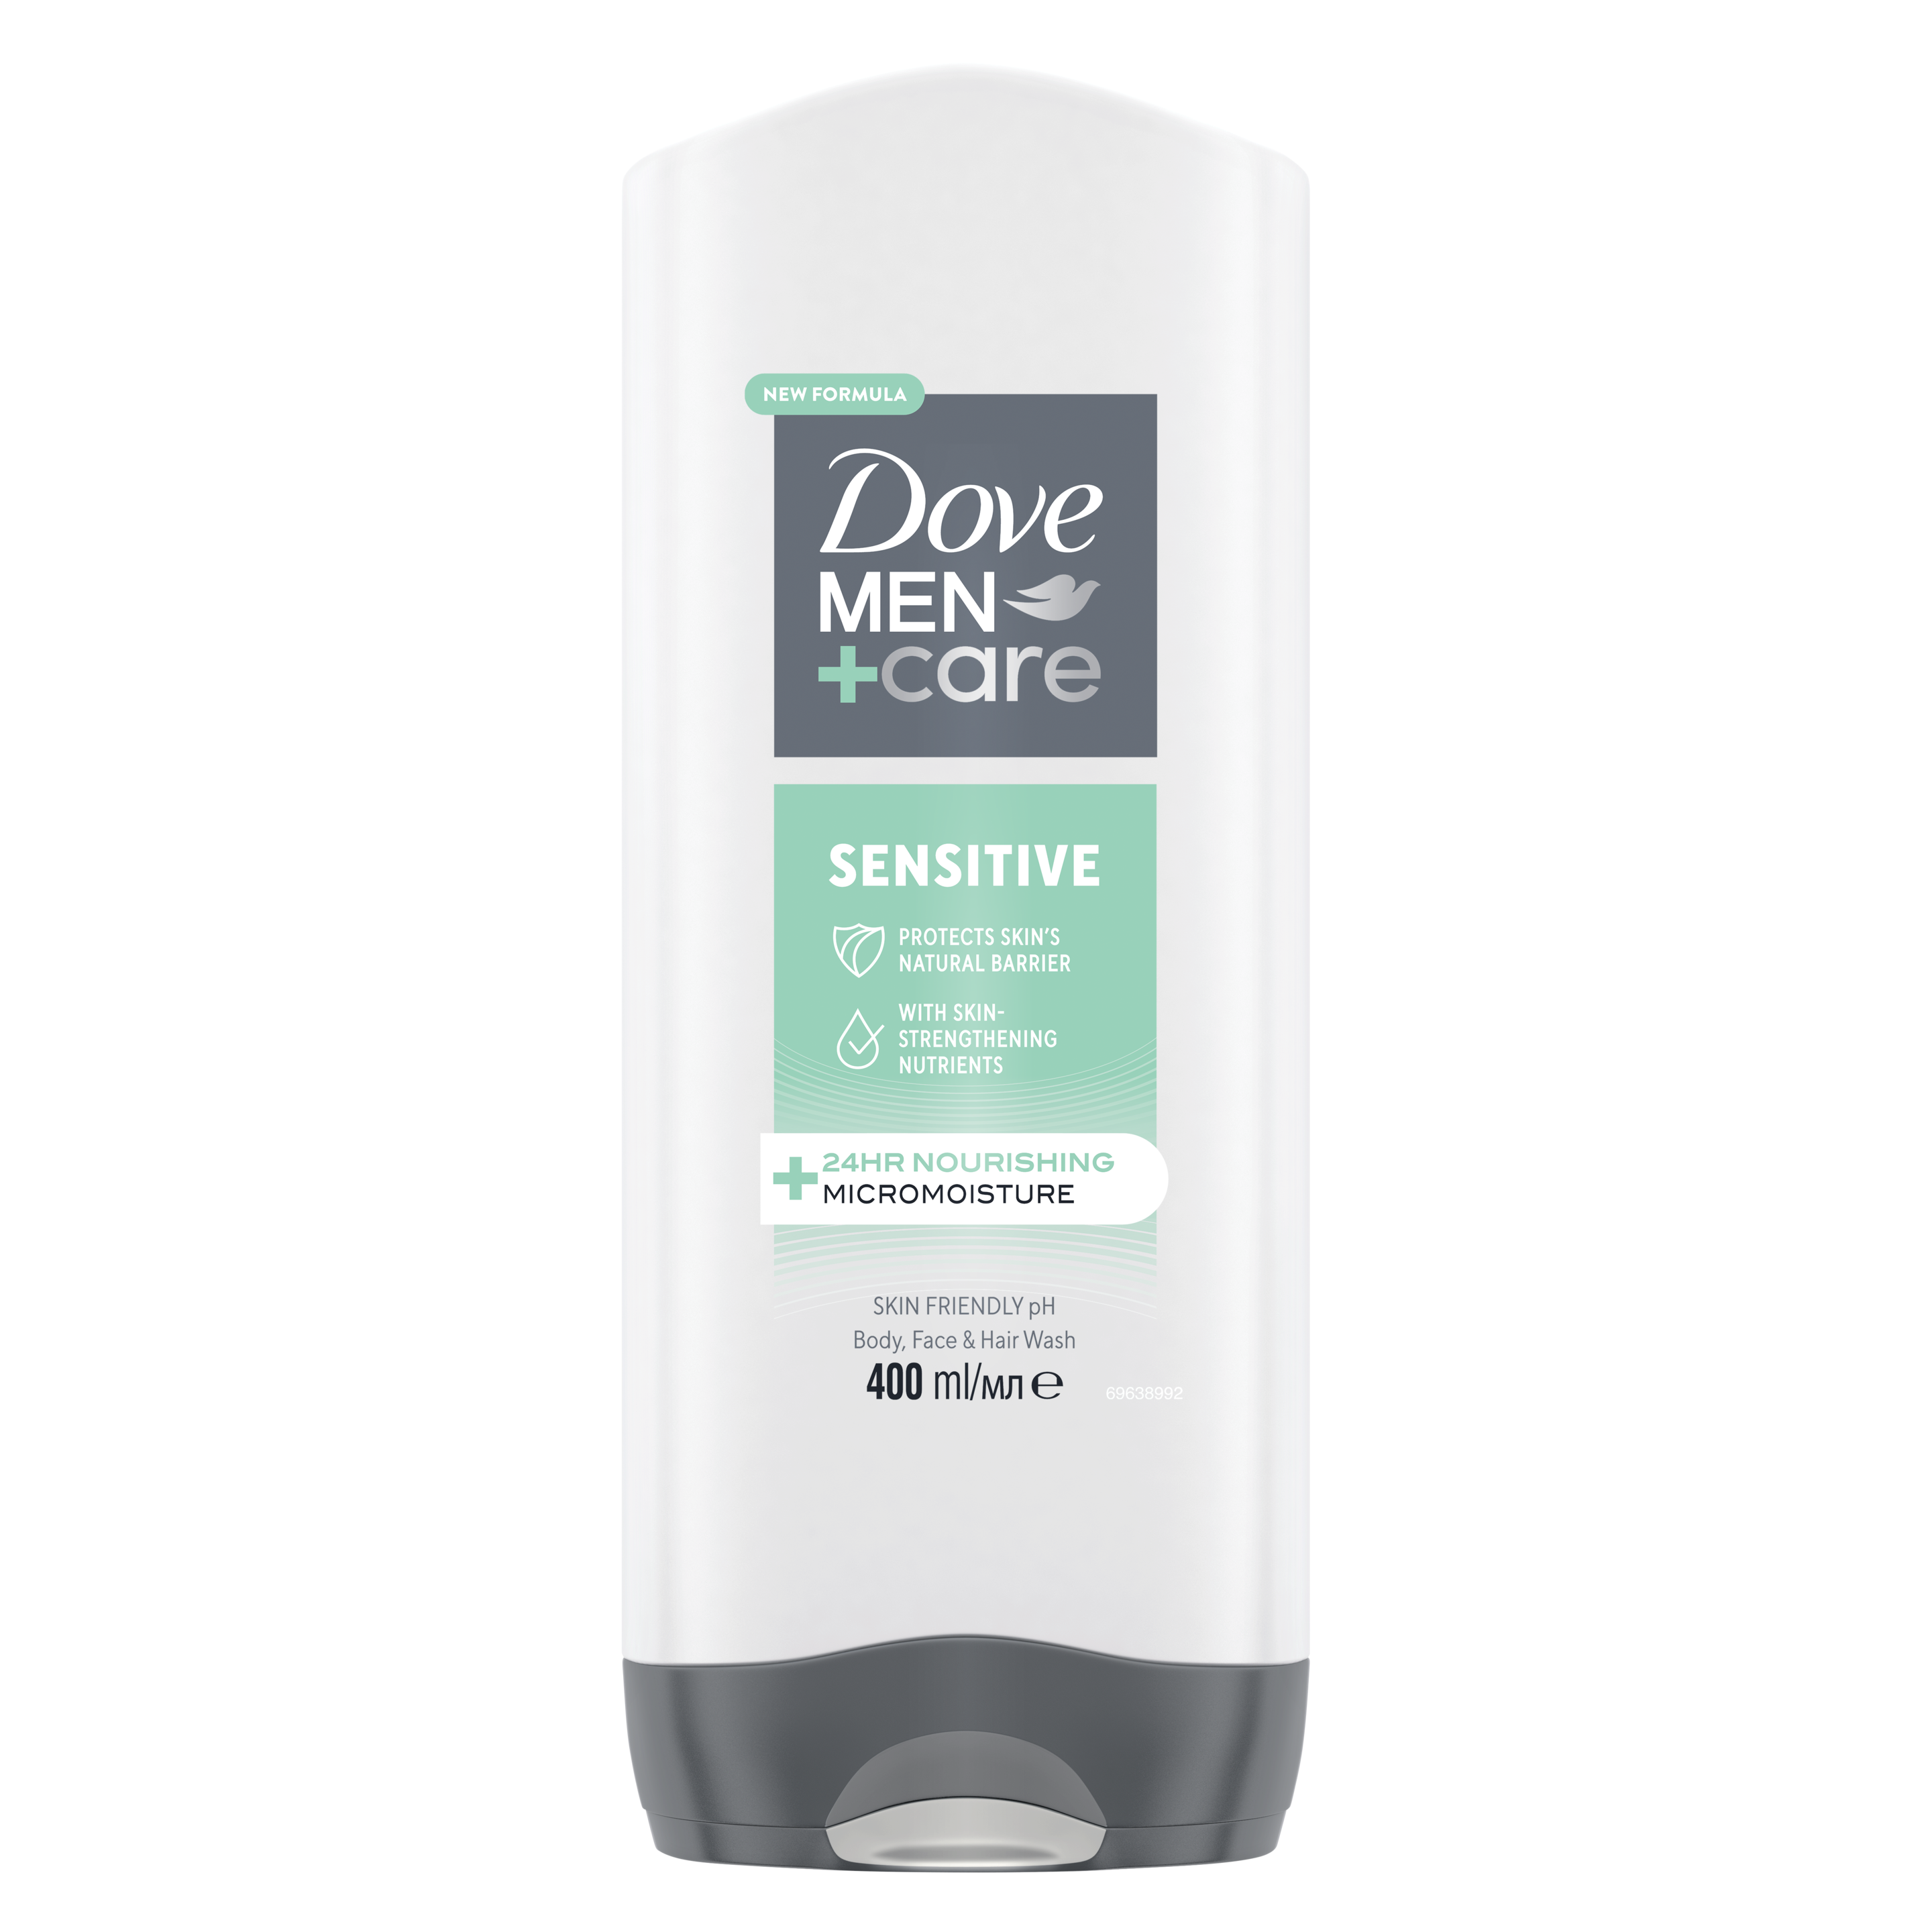 Dove Men+Care Hydrating Sensitive 3-in-1 Body, Face + Hair Wash